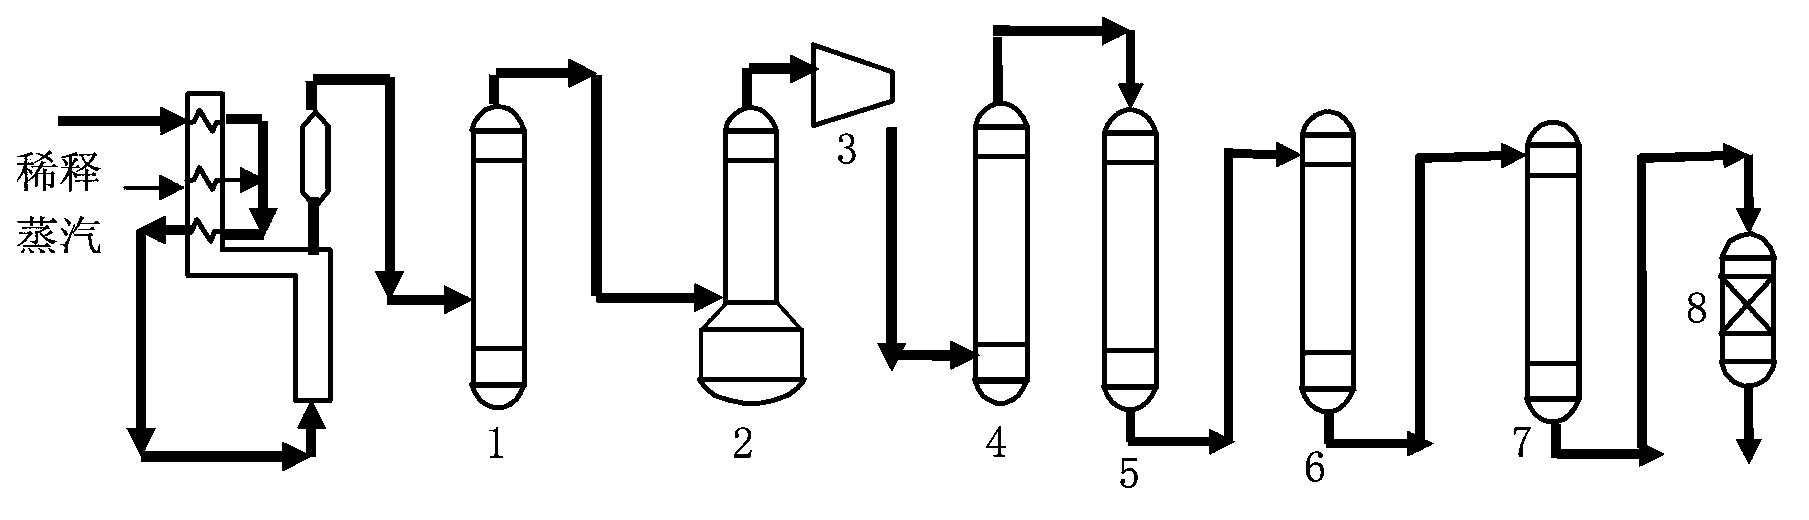 C3 fraction selective hydrogenation method